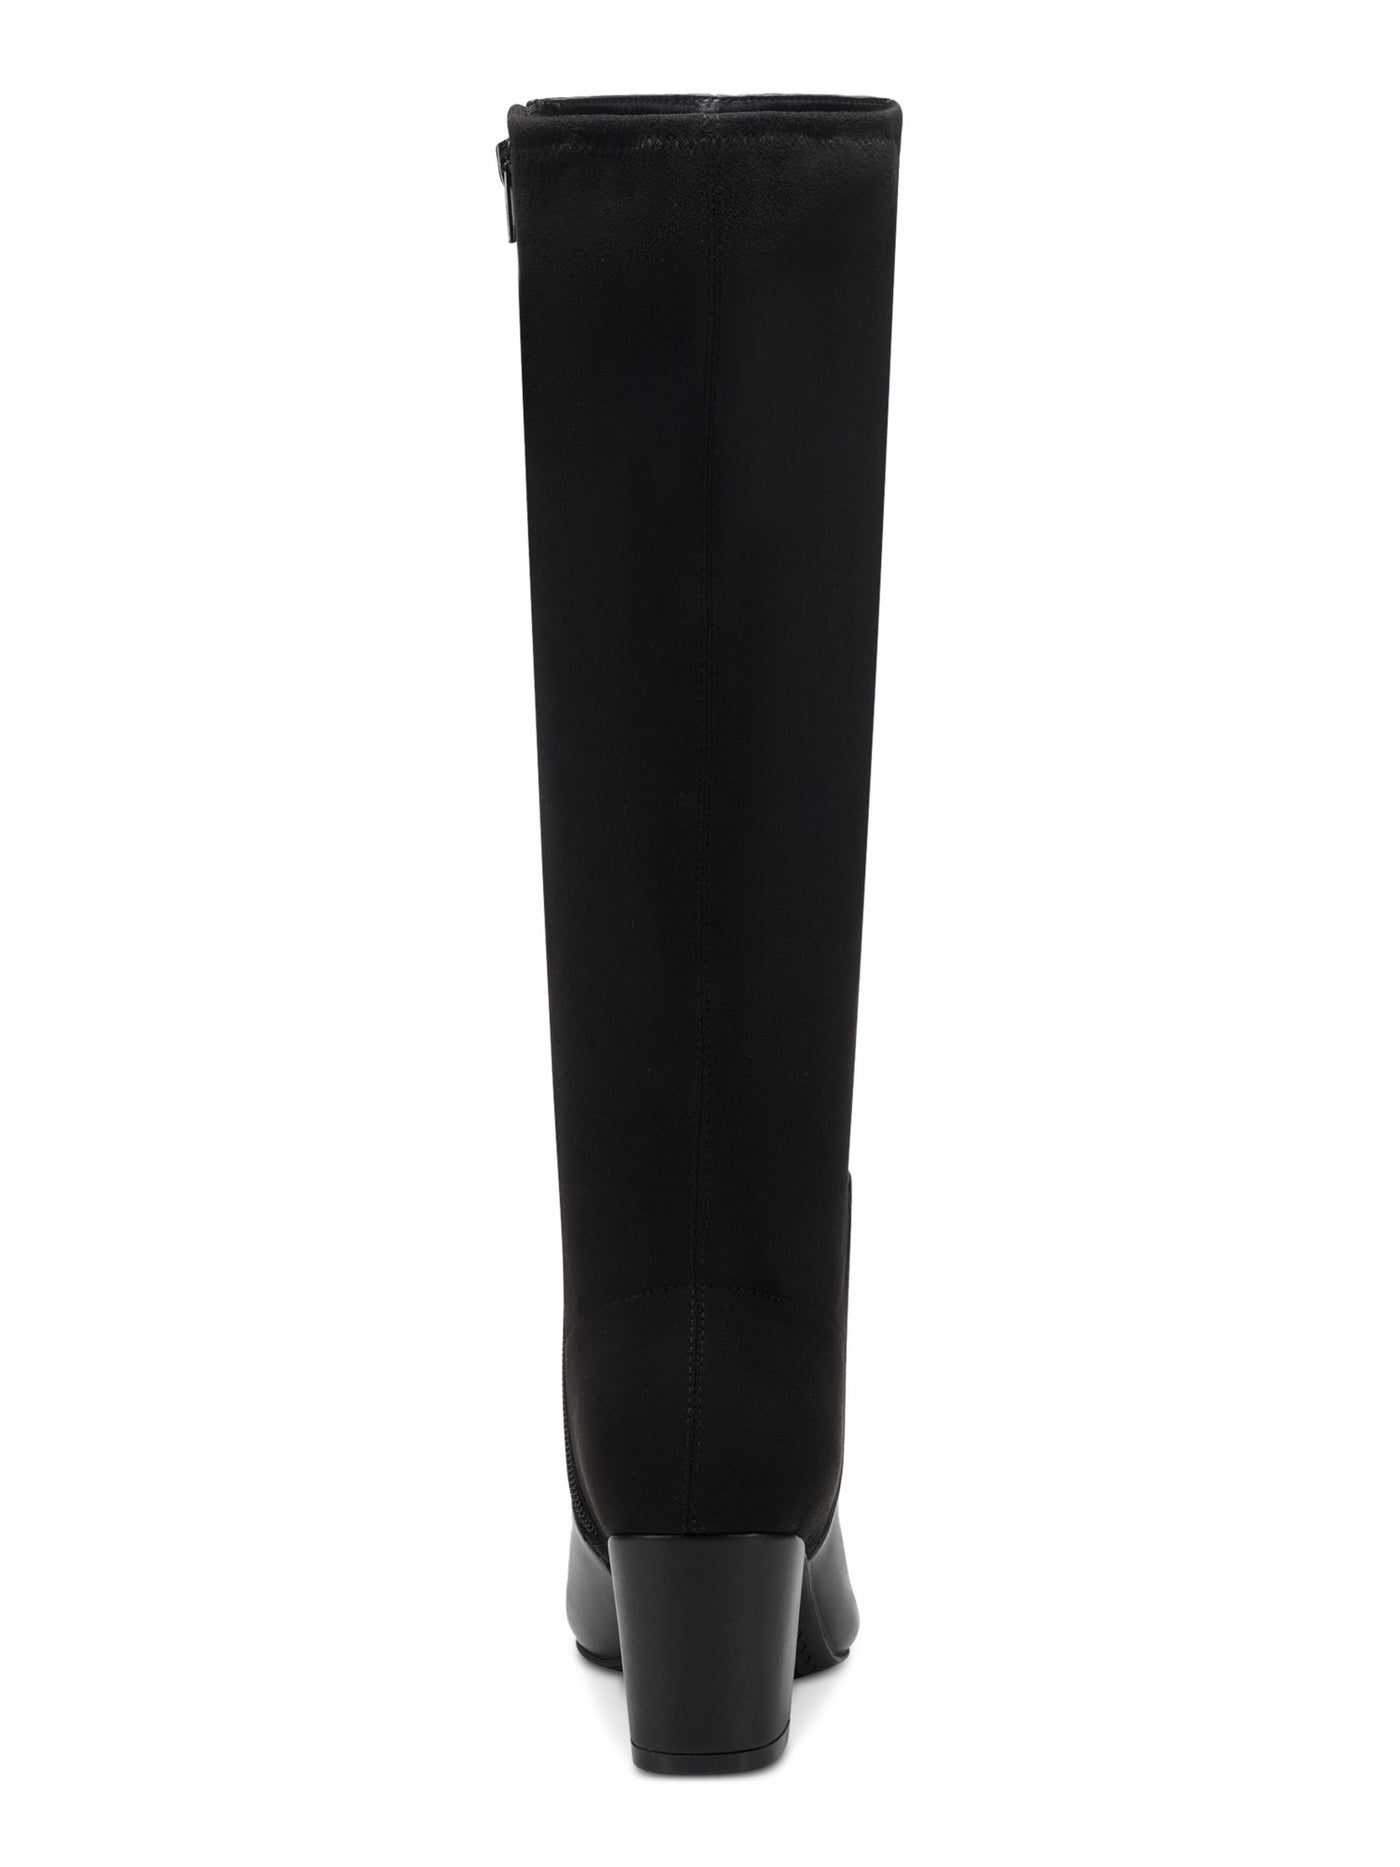 CHARTER CLUB Womens Black Comfort Sacaria Almond Toe Block Heel Zip-Up Dress Boots 6.5 M